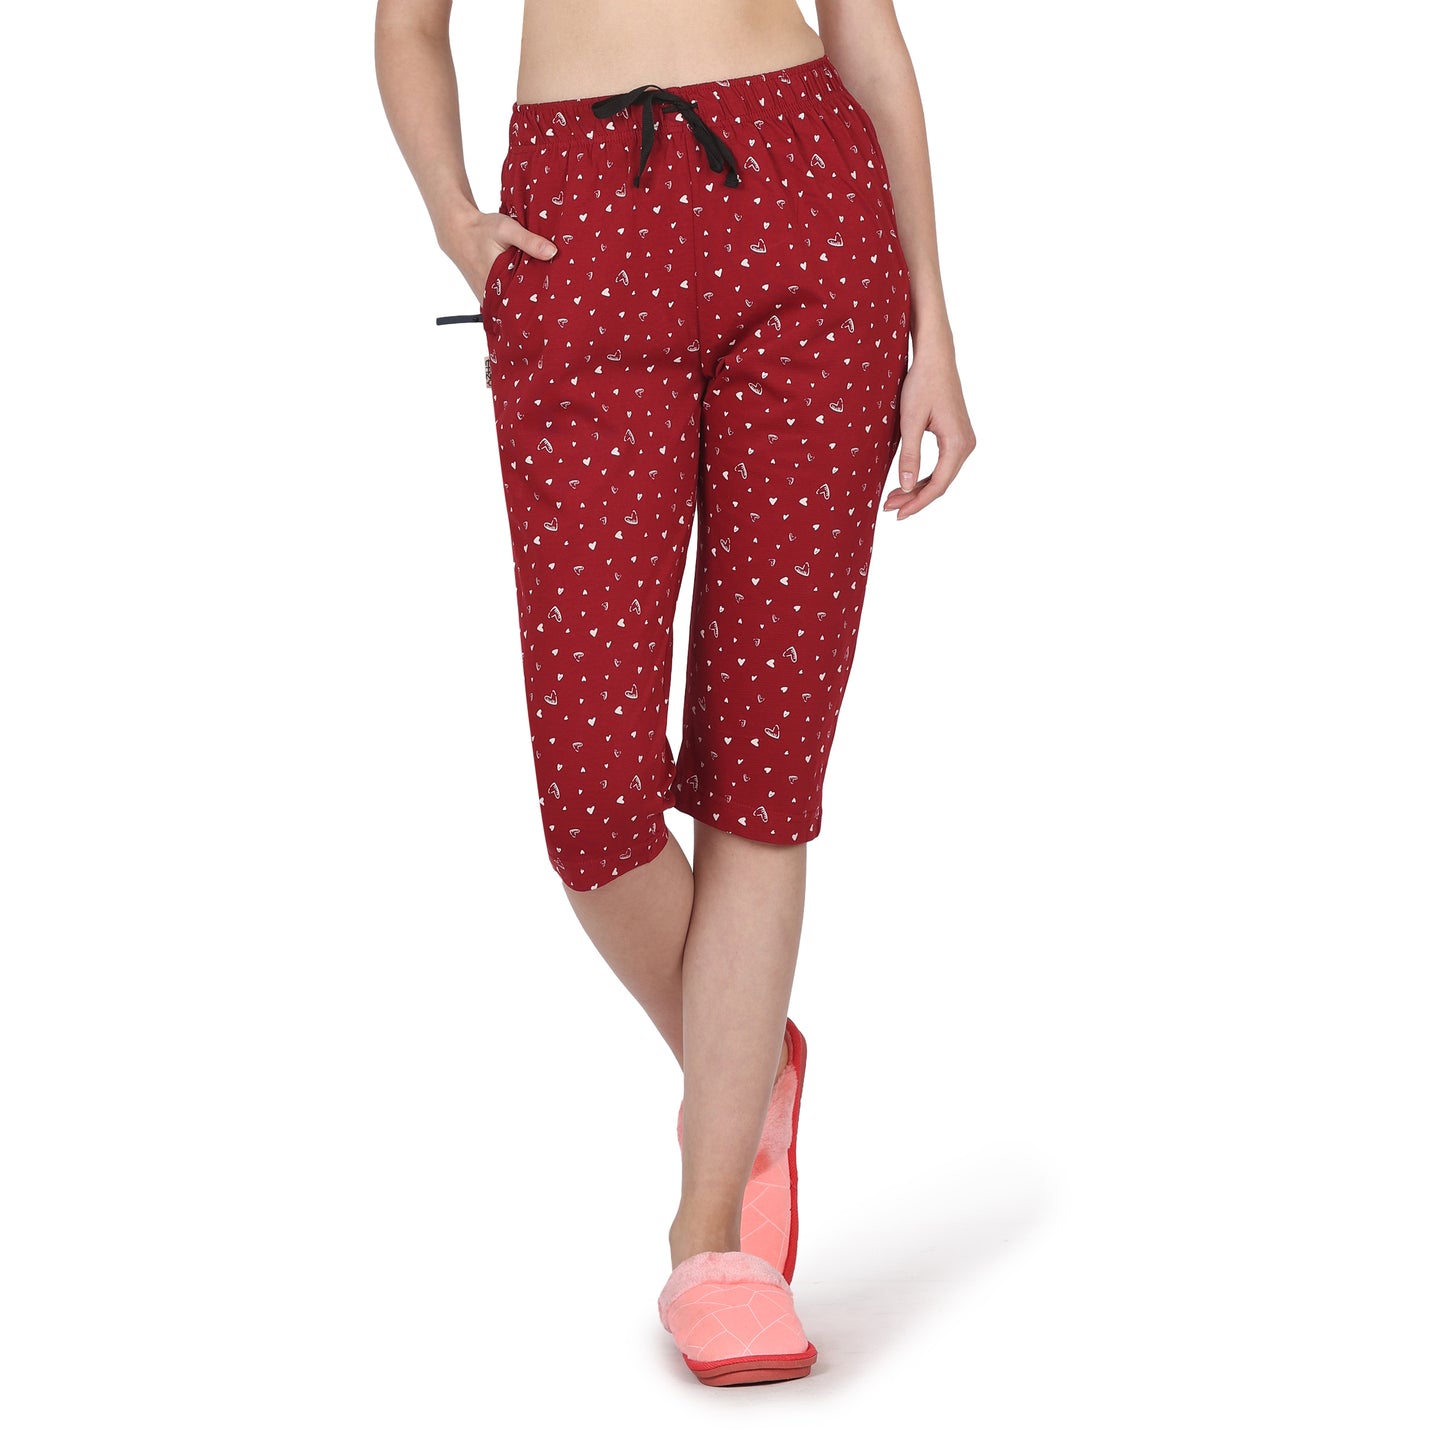 Eazy Women's Printed Capri Pants- Pack of 5- Blush, Black, Navy Blue, Steel Blue & Cherry Red